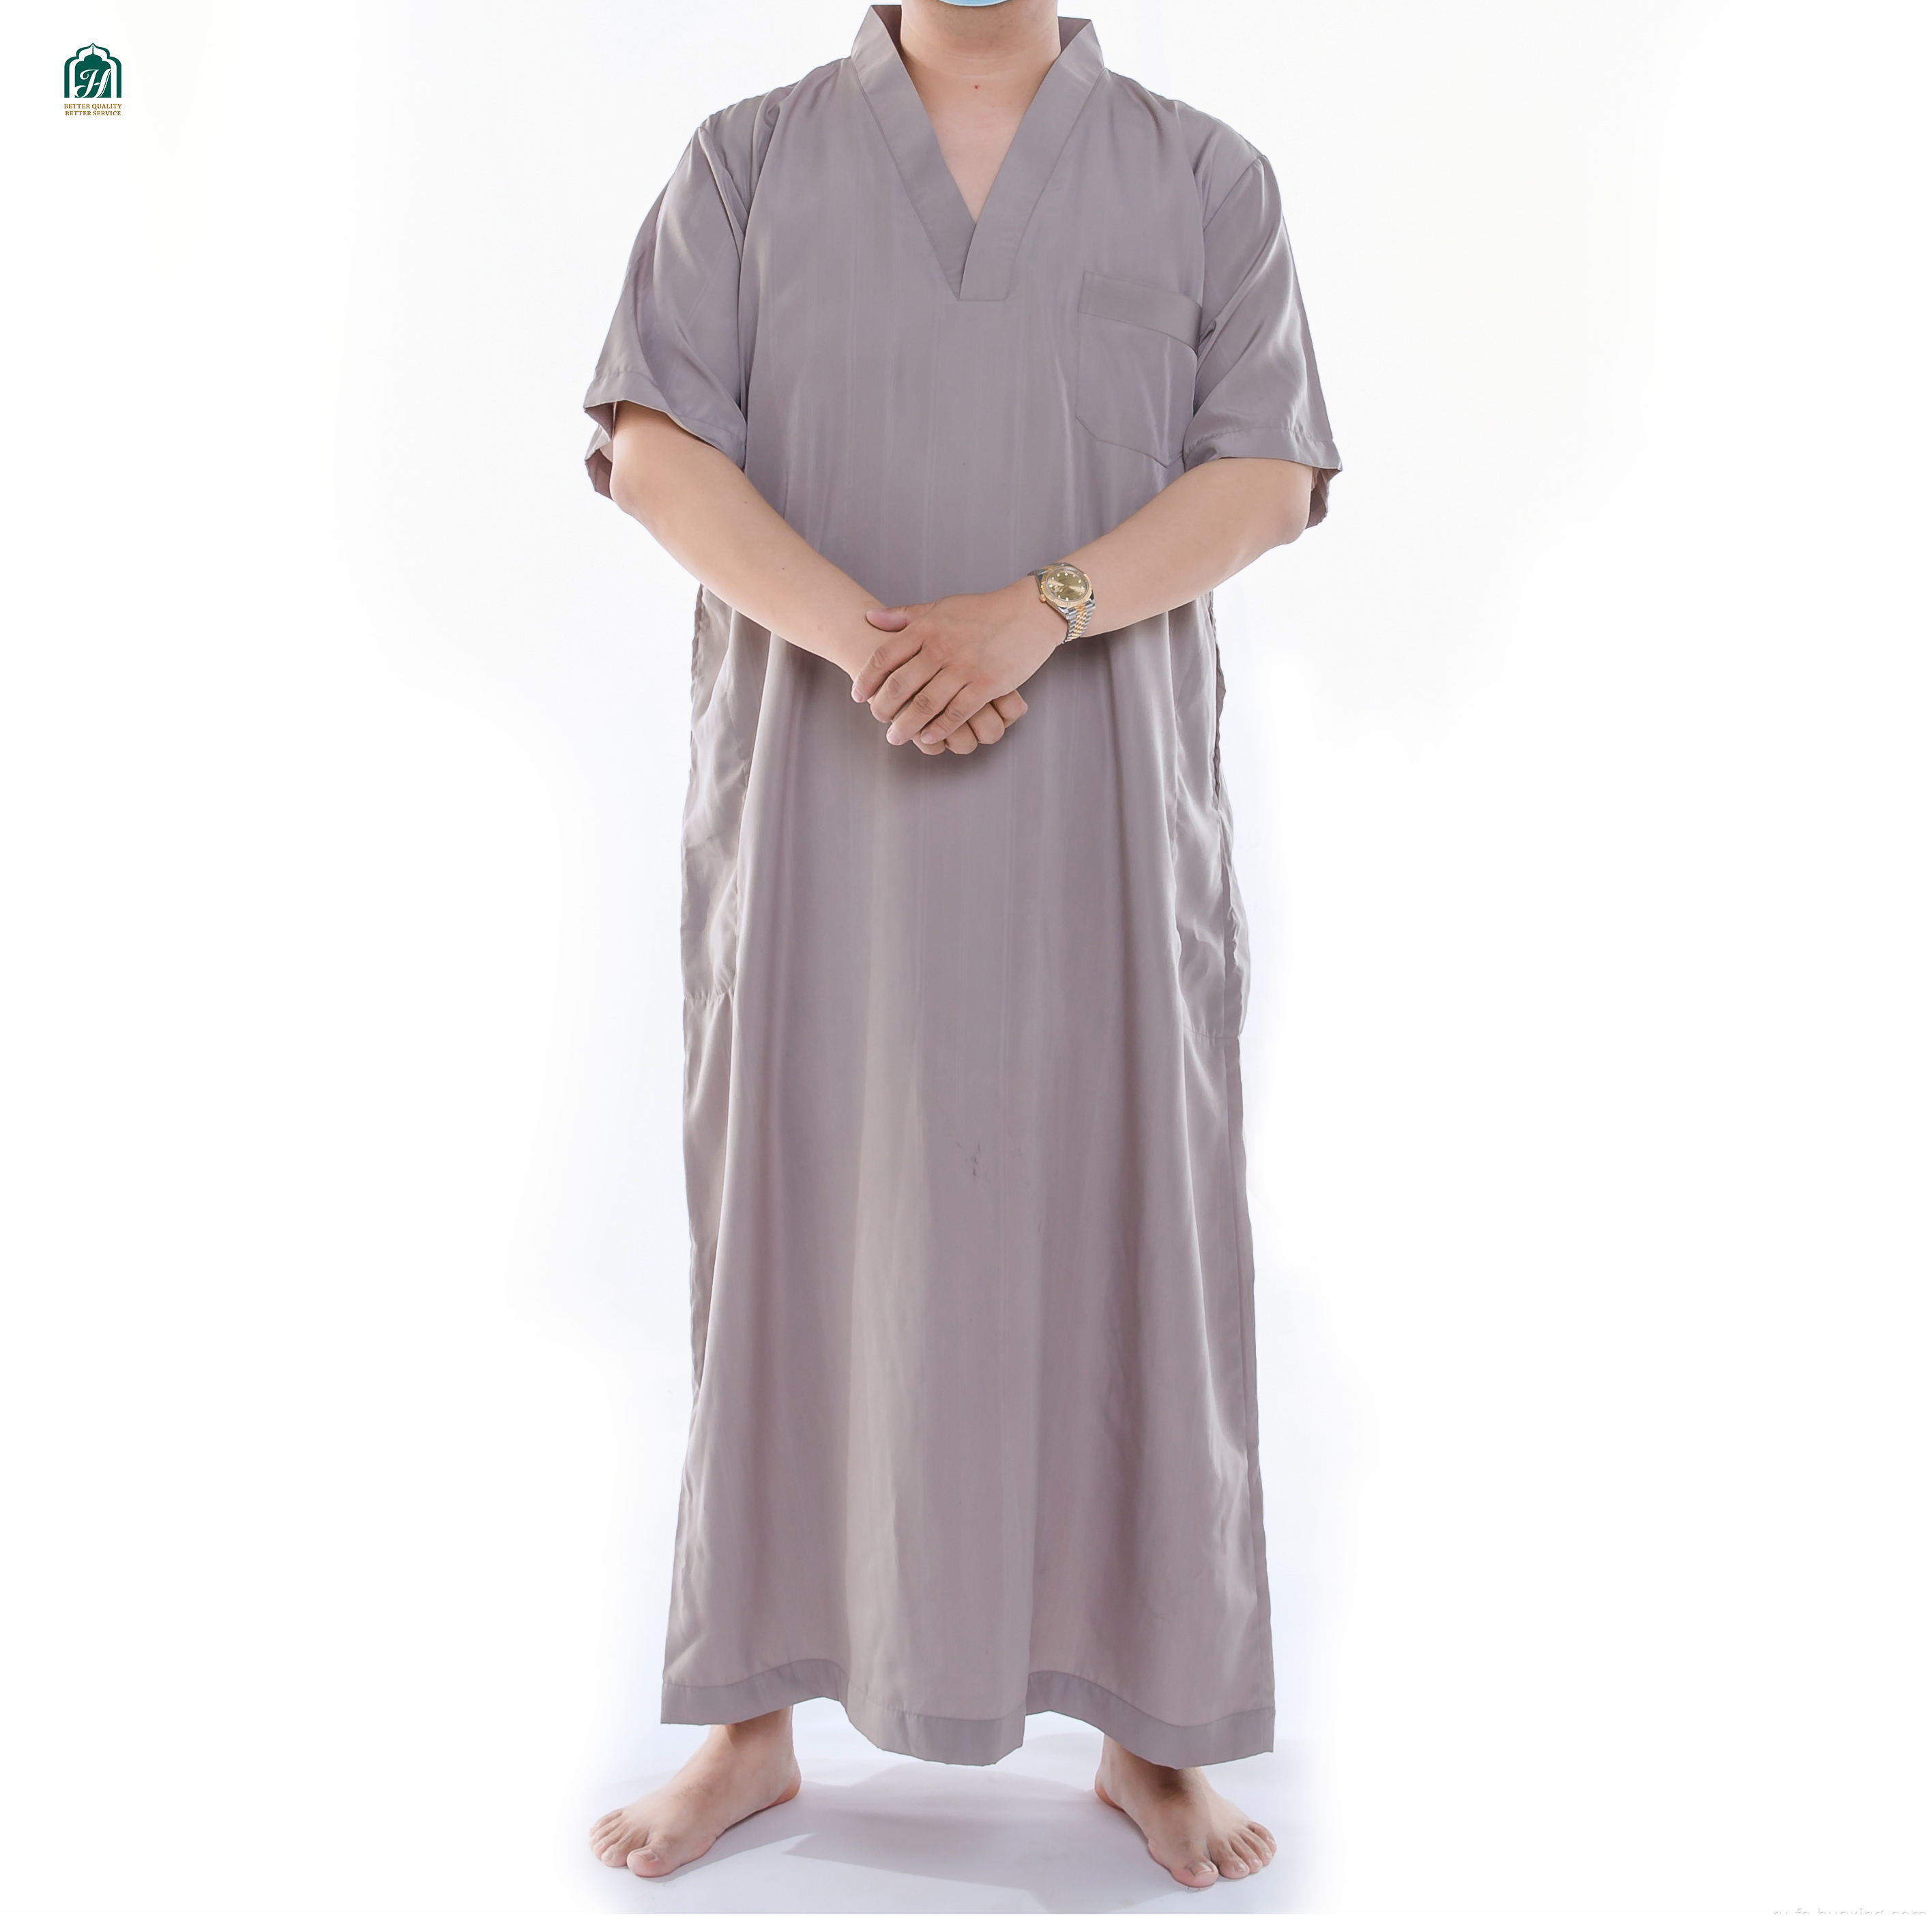 Thobe Thawb Rape Abaya для мужской исламской одежды